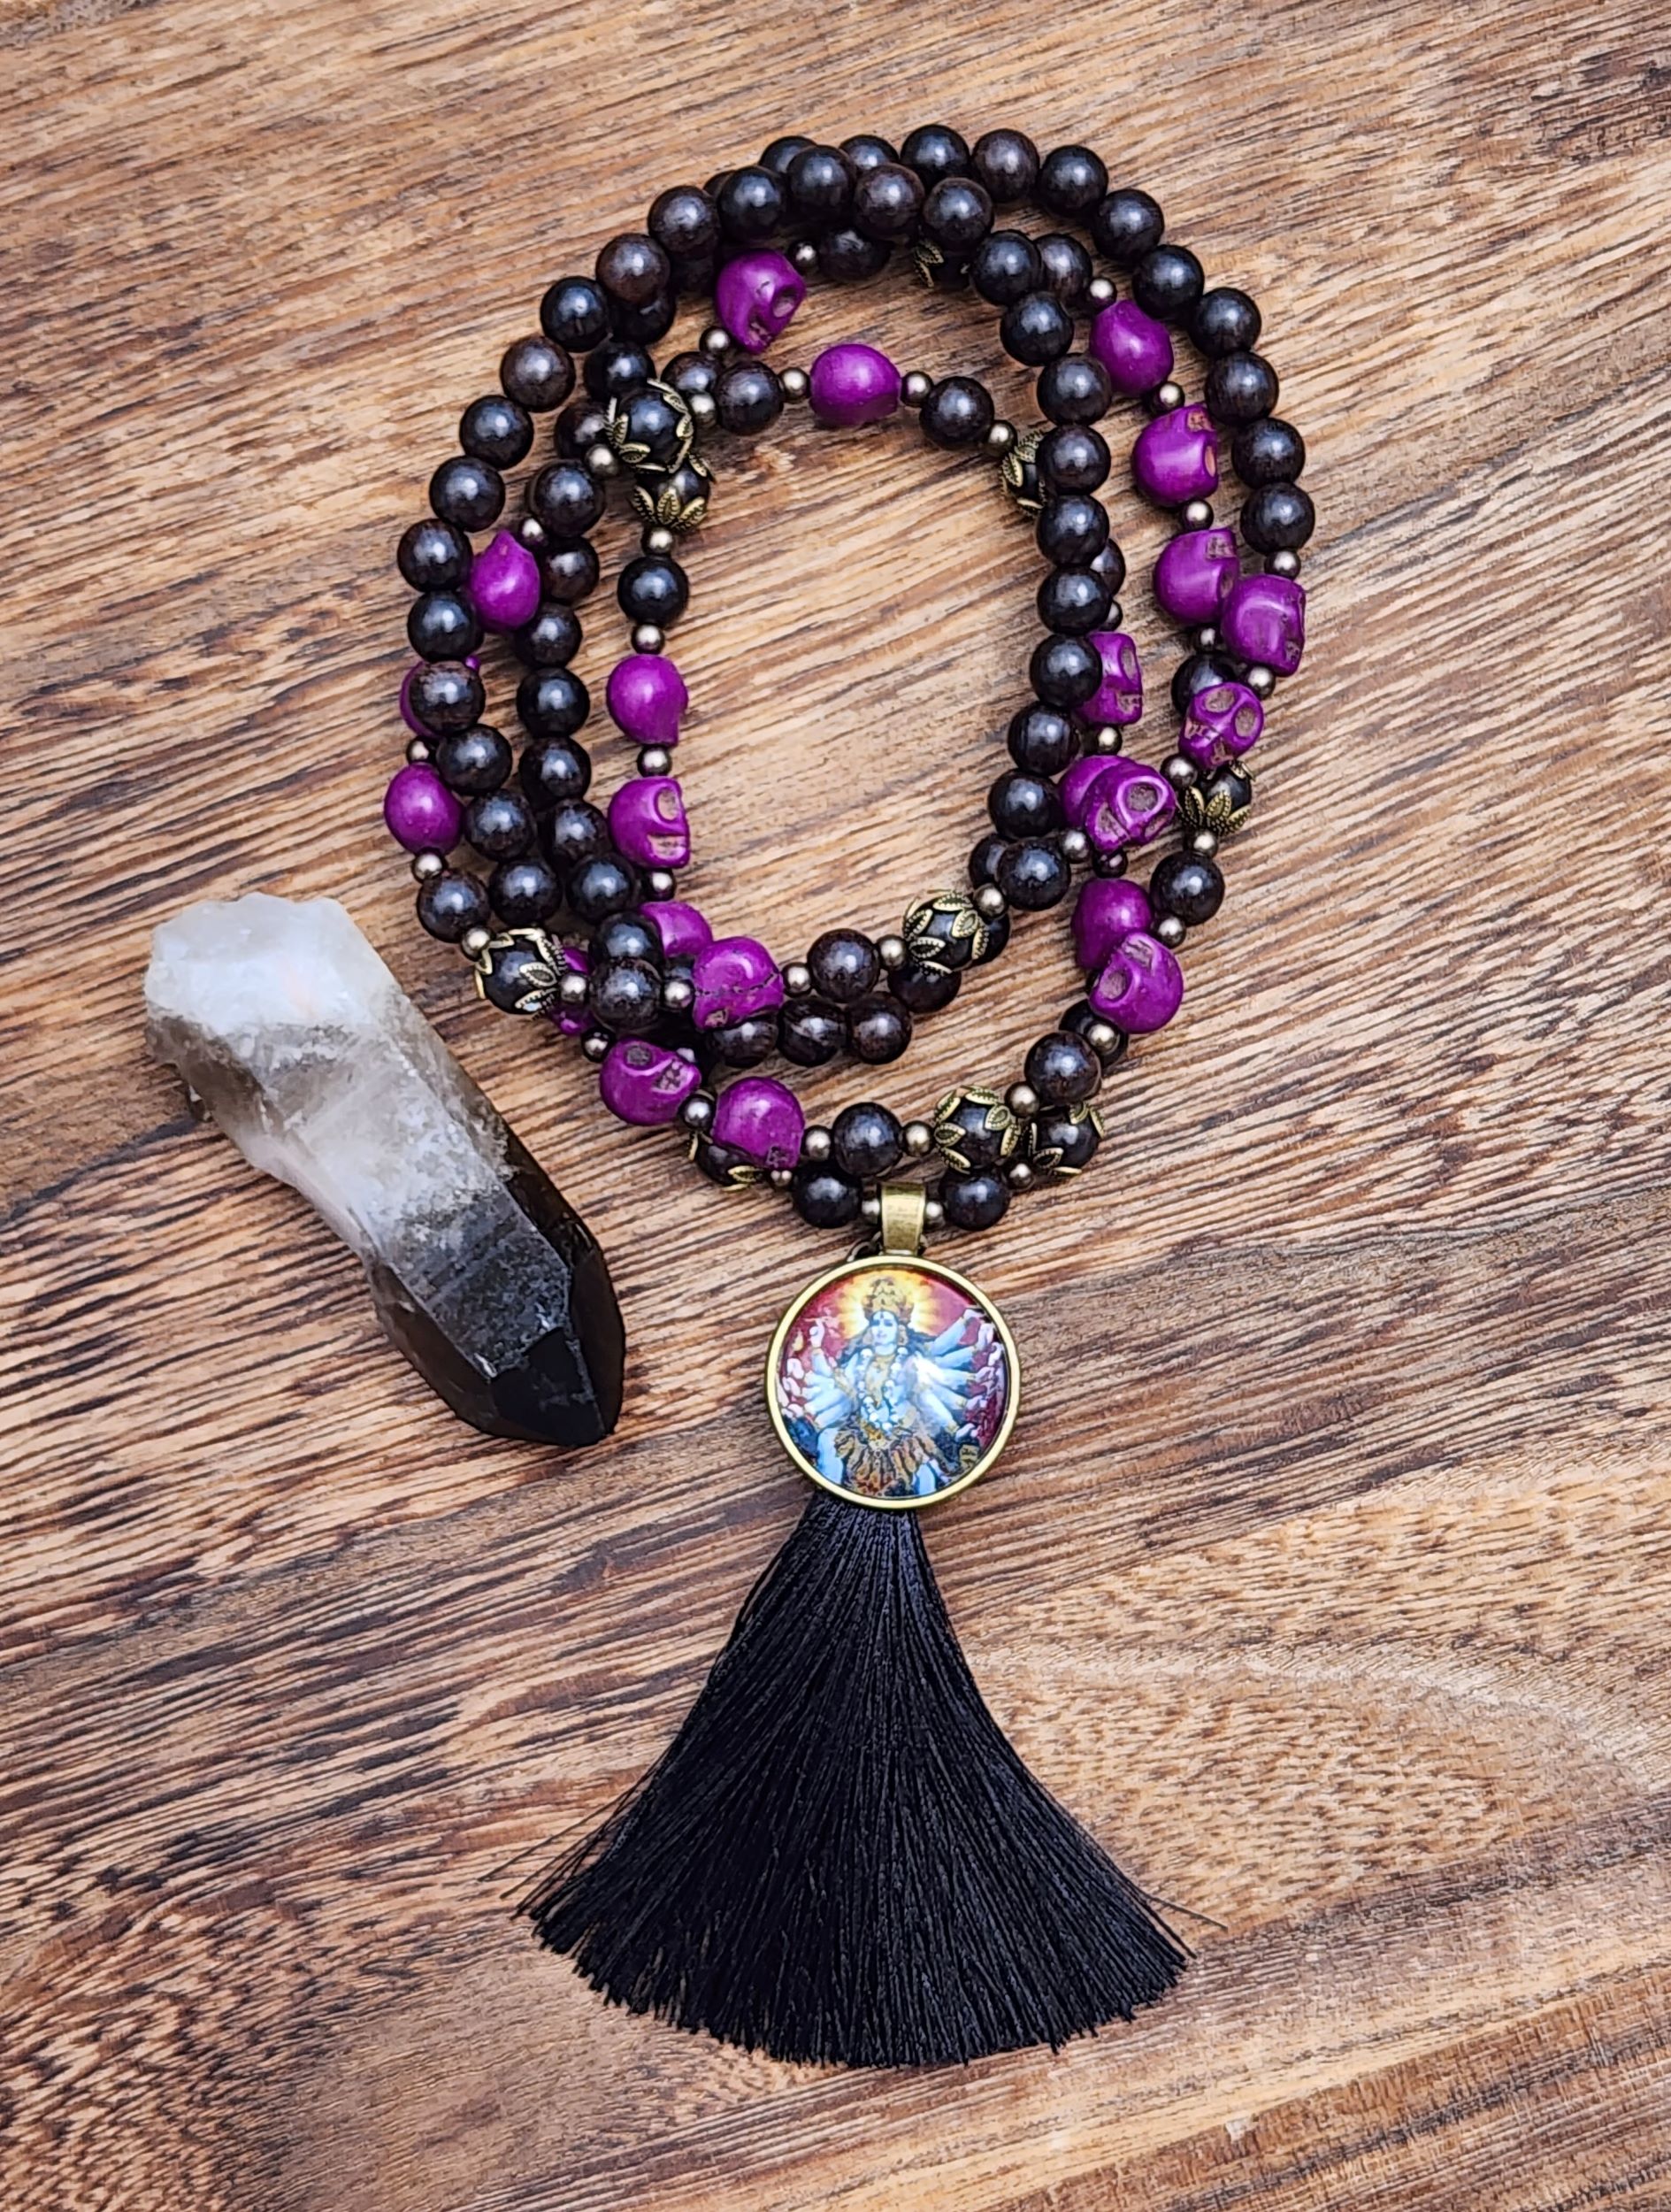 Kali Ma Mala featuring ebony wood, purple skulls, and black tassel